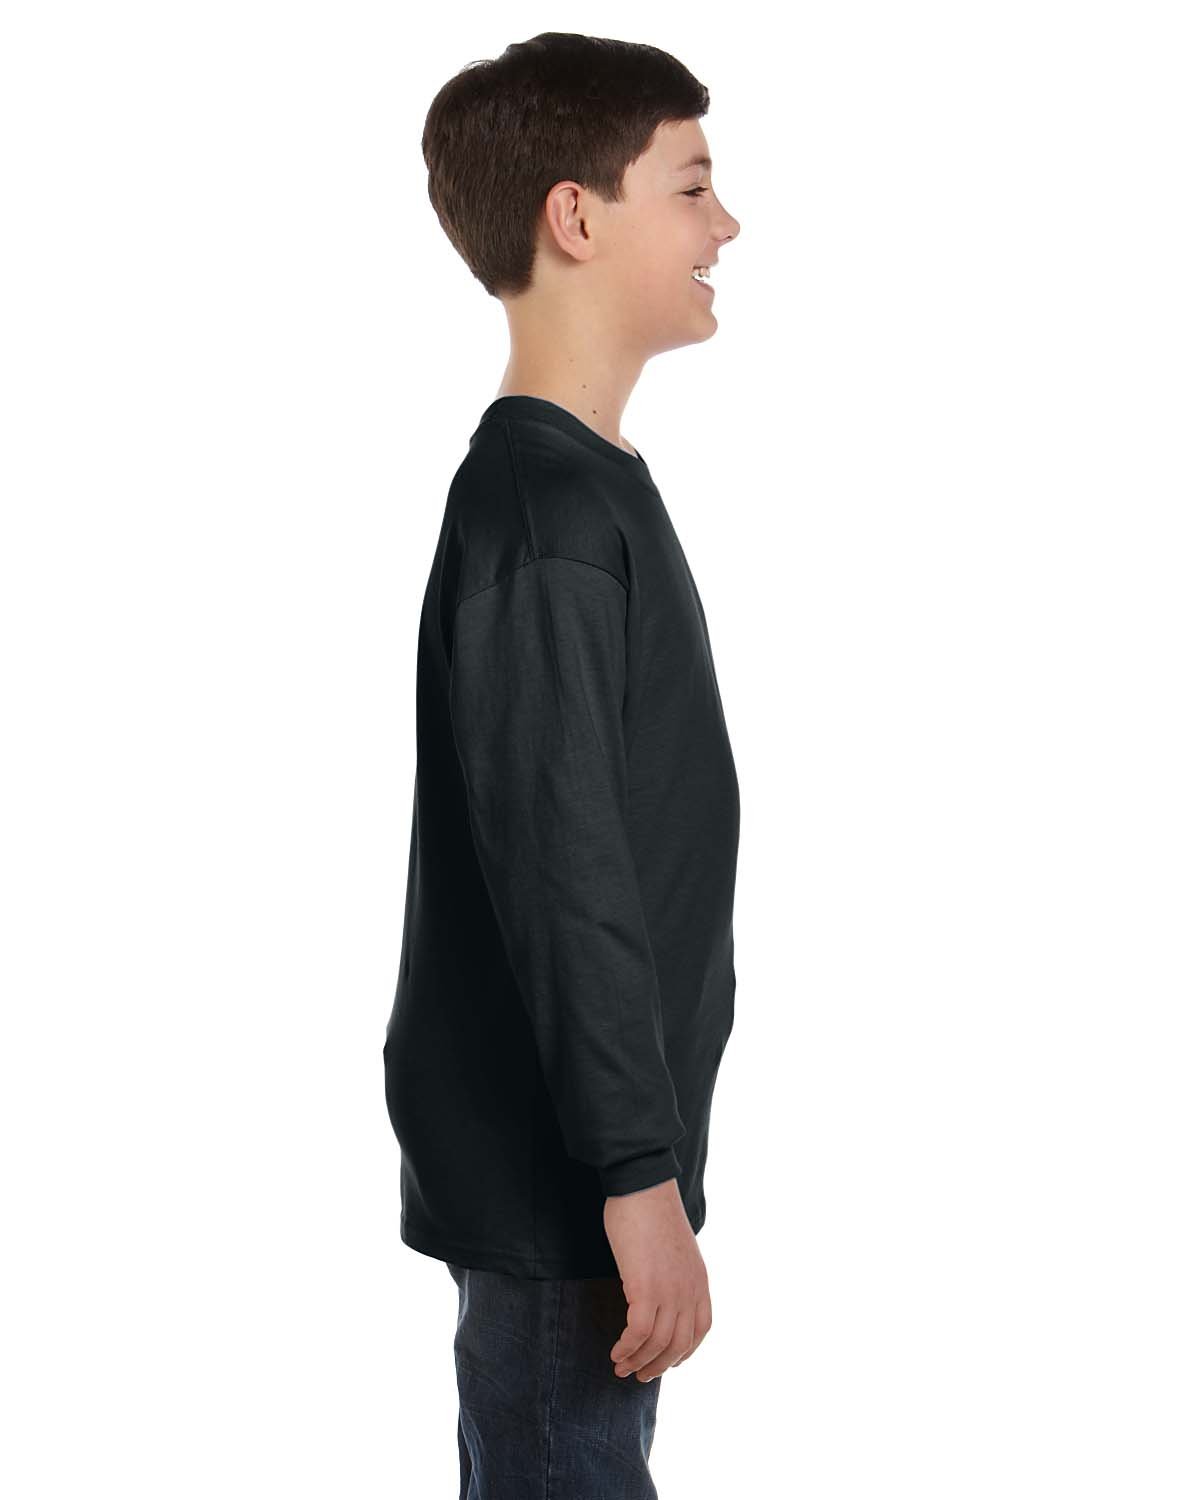 Gildan Youth Ultra Cotton Long Sleeve T-Shirt, Style G2400B, 2-Pack